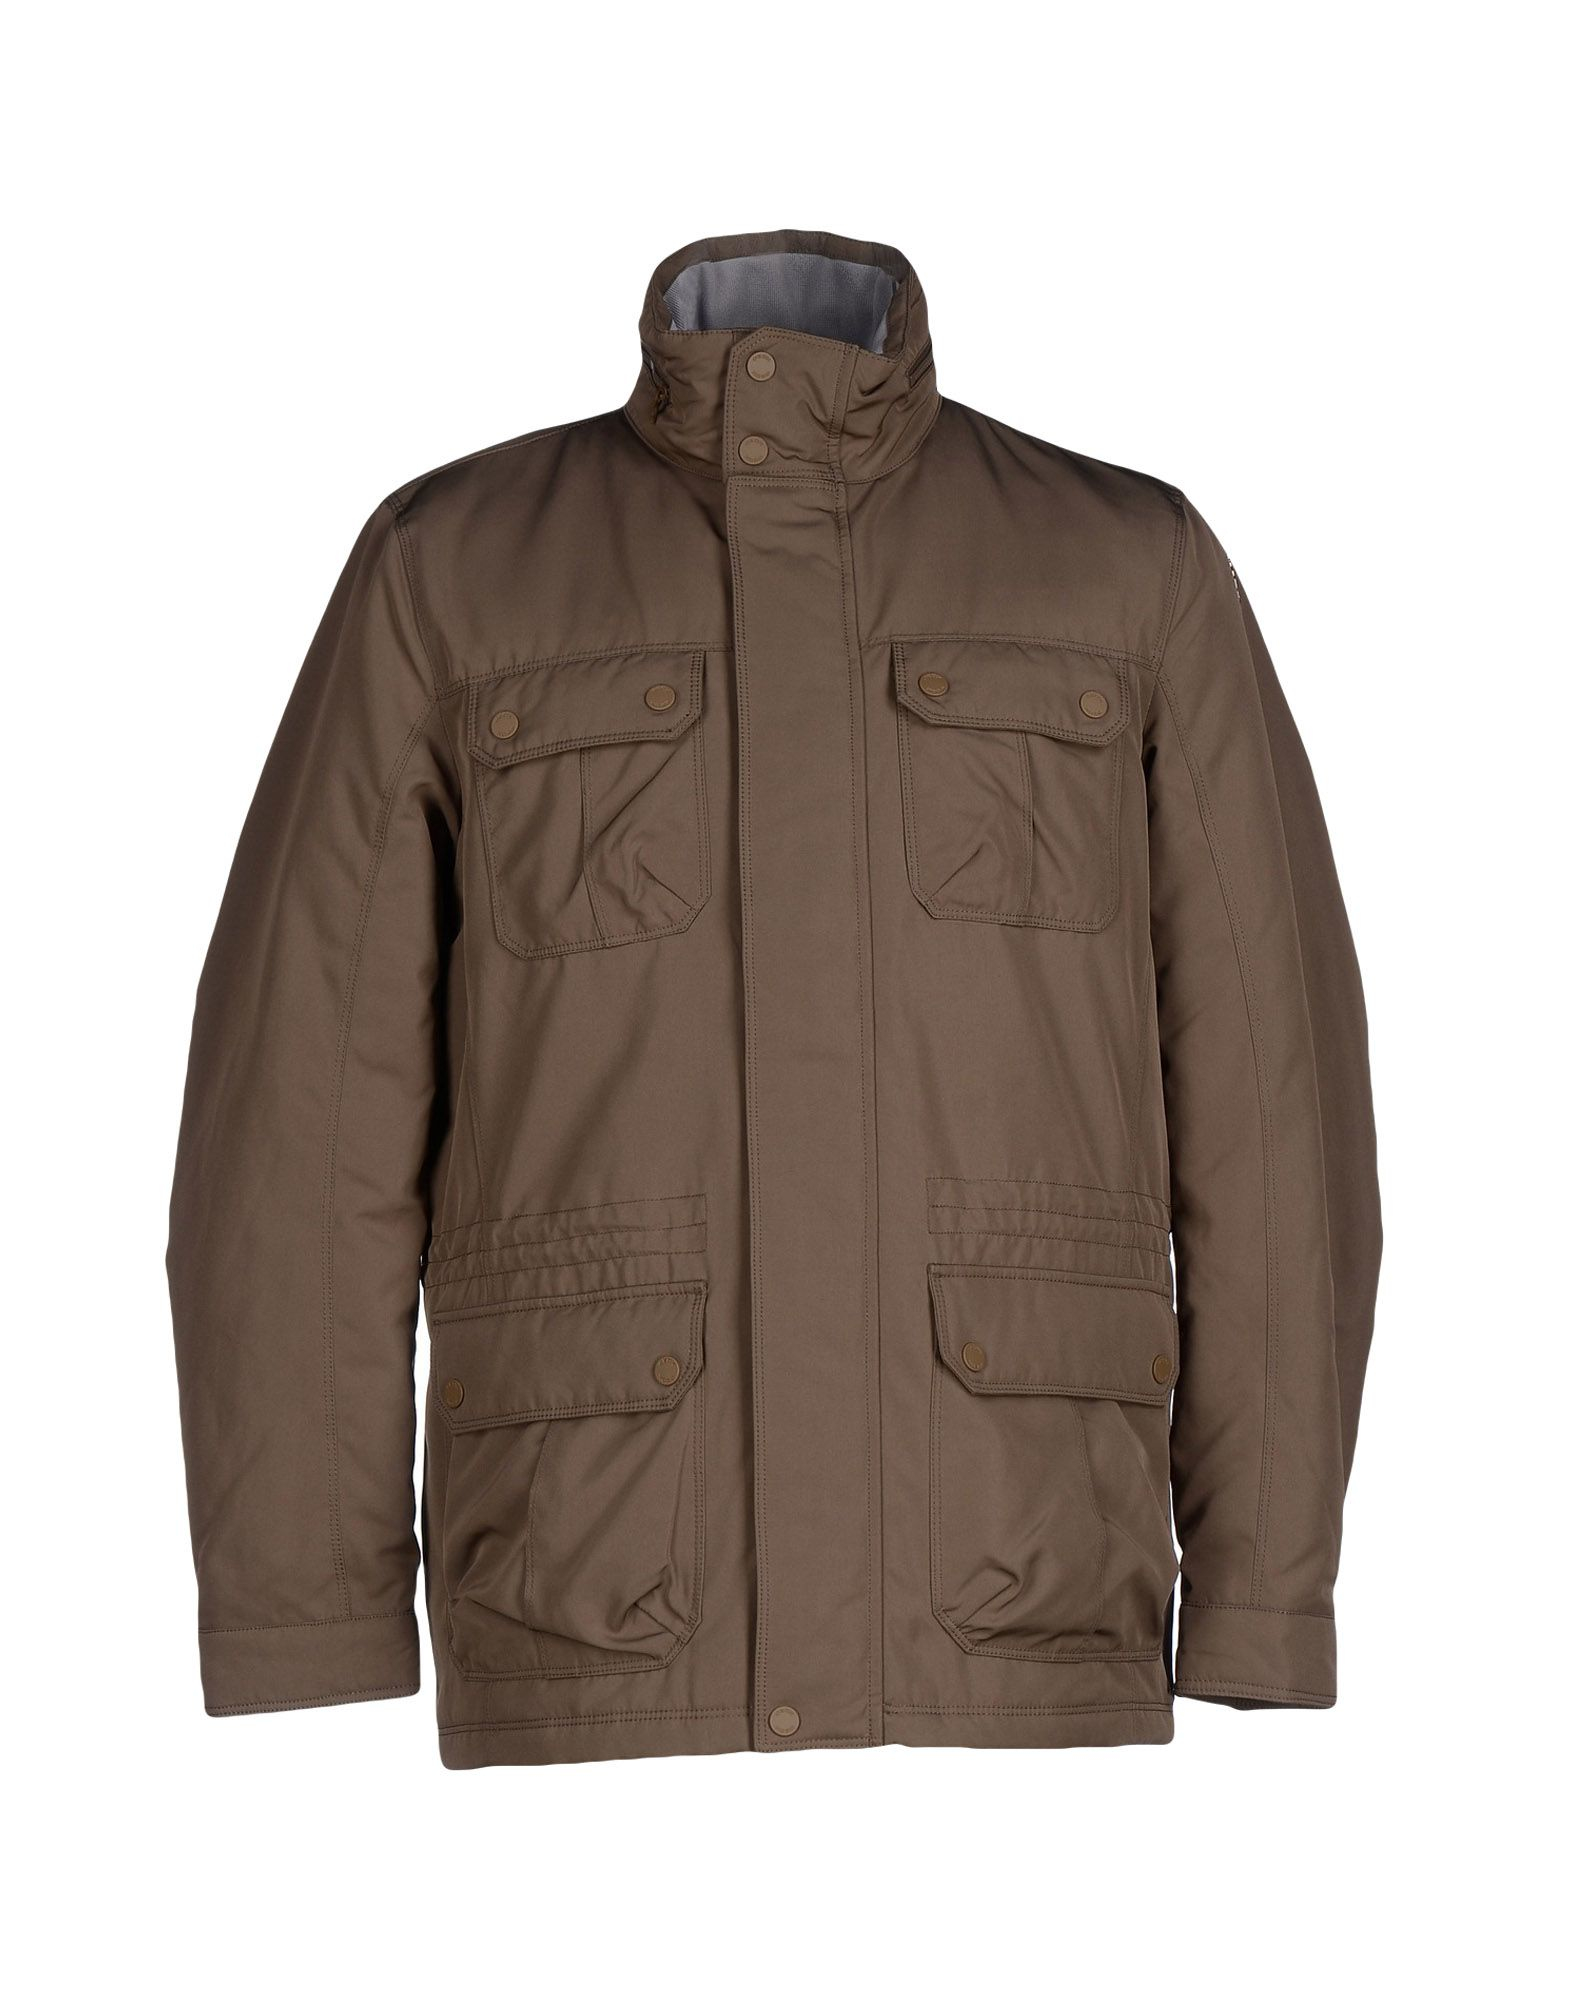 Lyst - Geox Jacket in Brown for Men